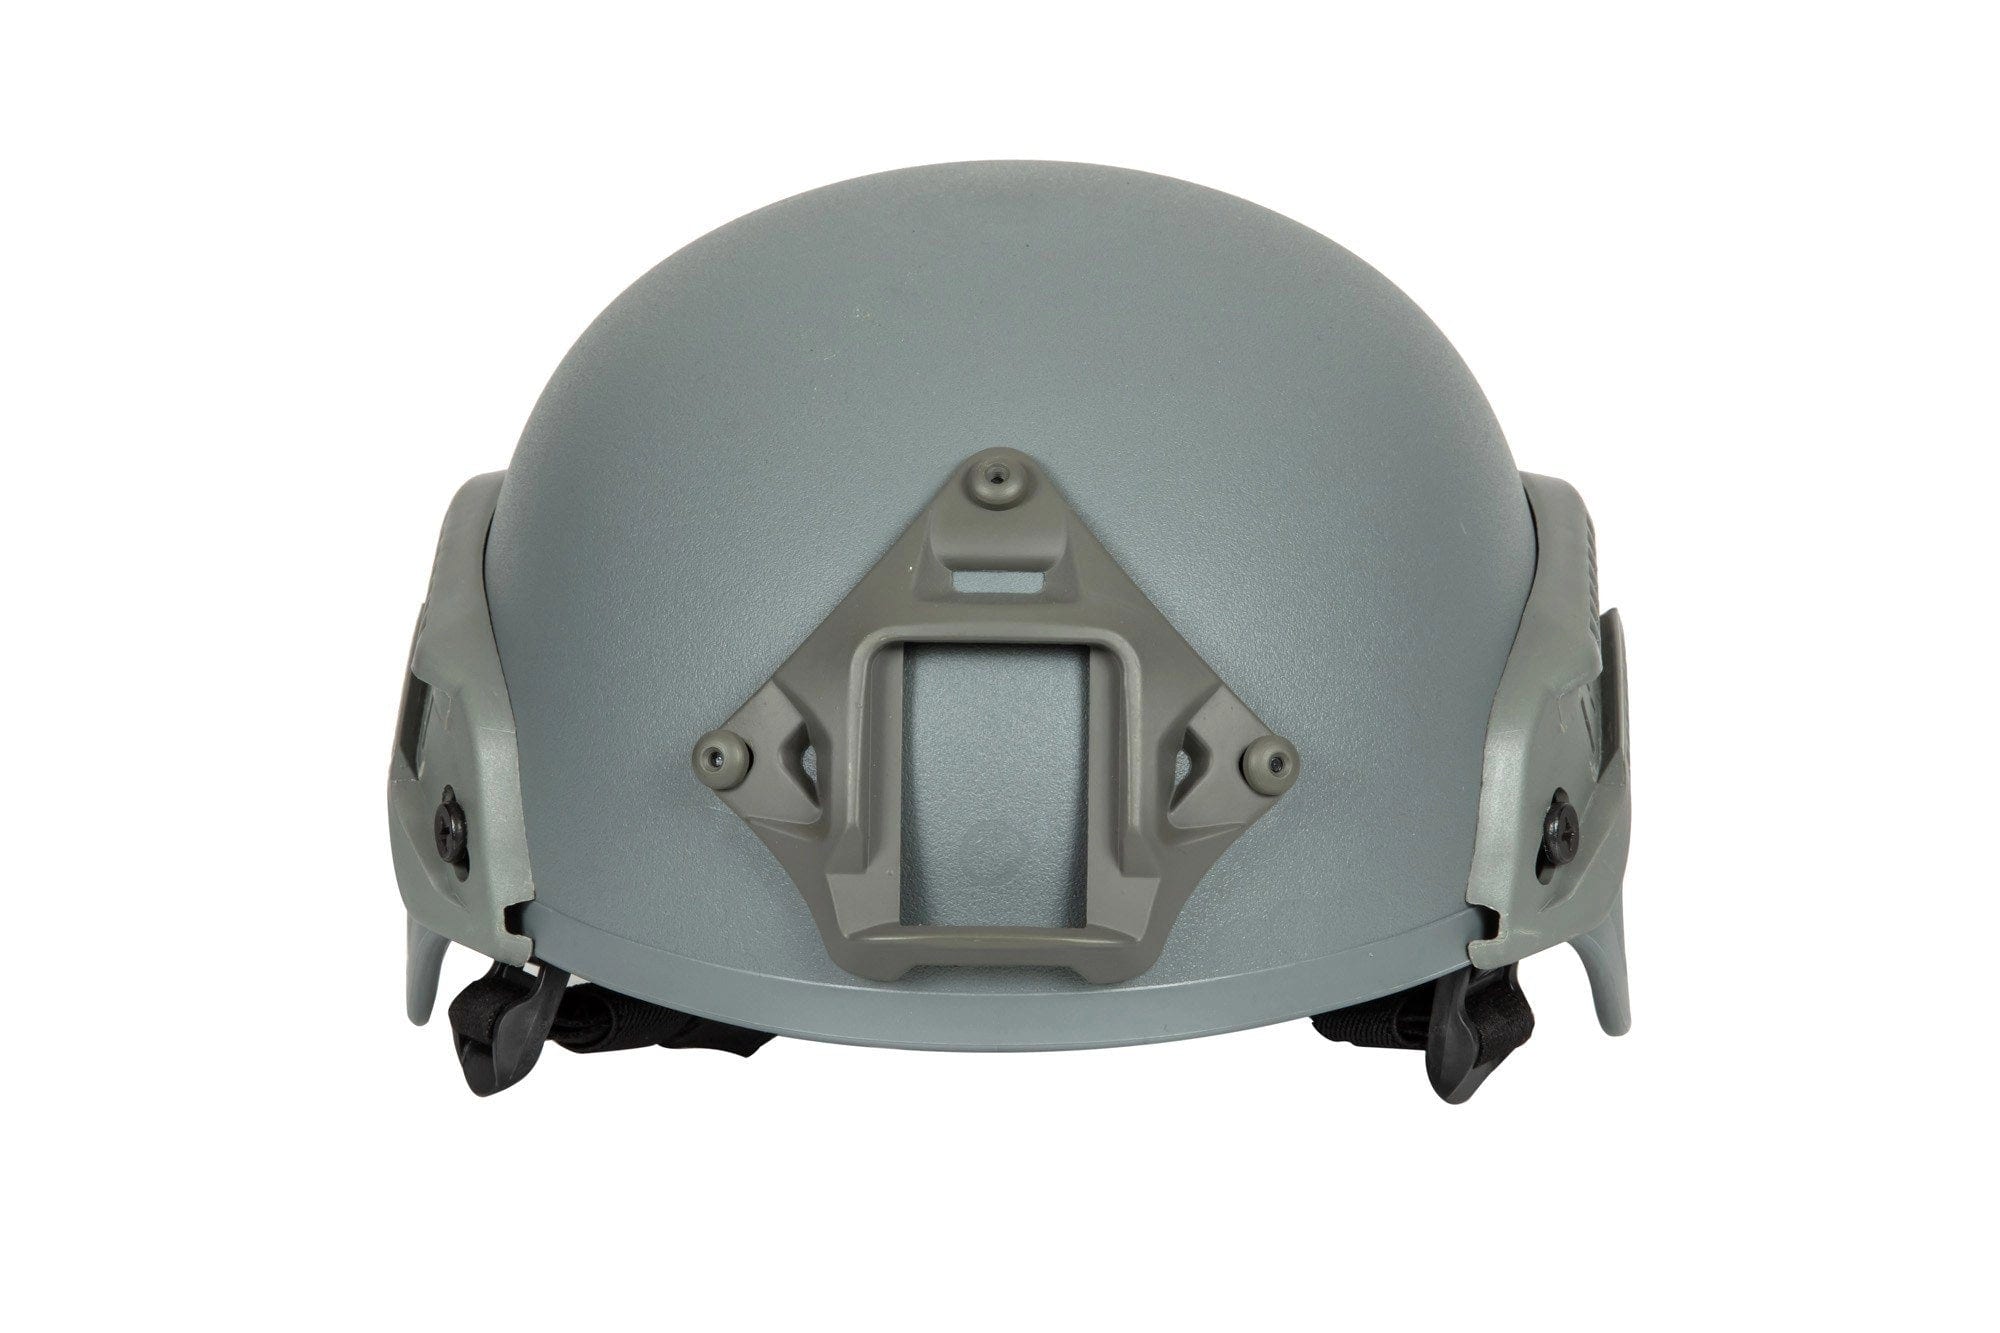 MICH 2000 Helmet Replica - Grey